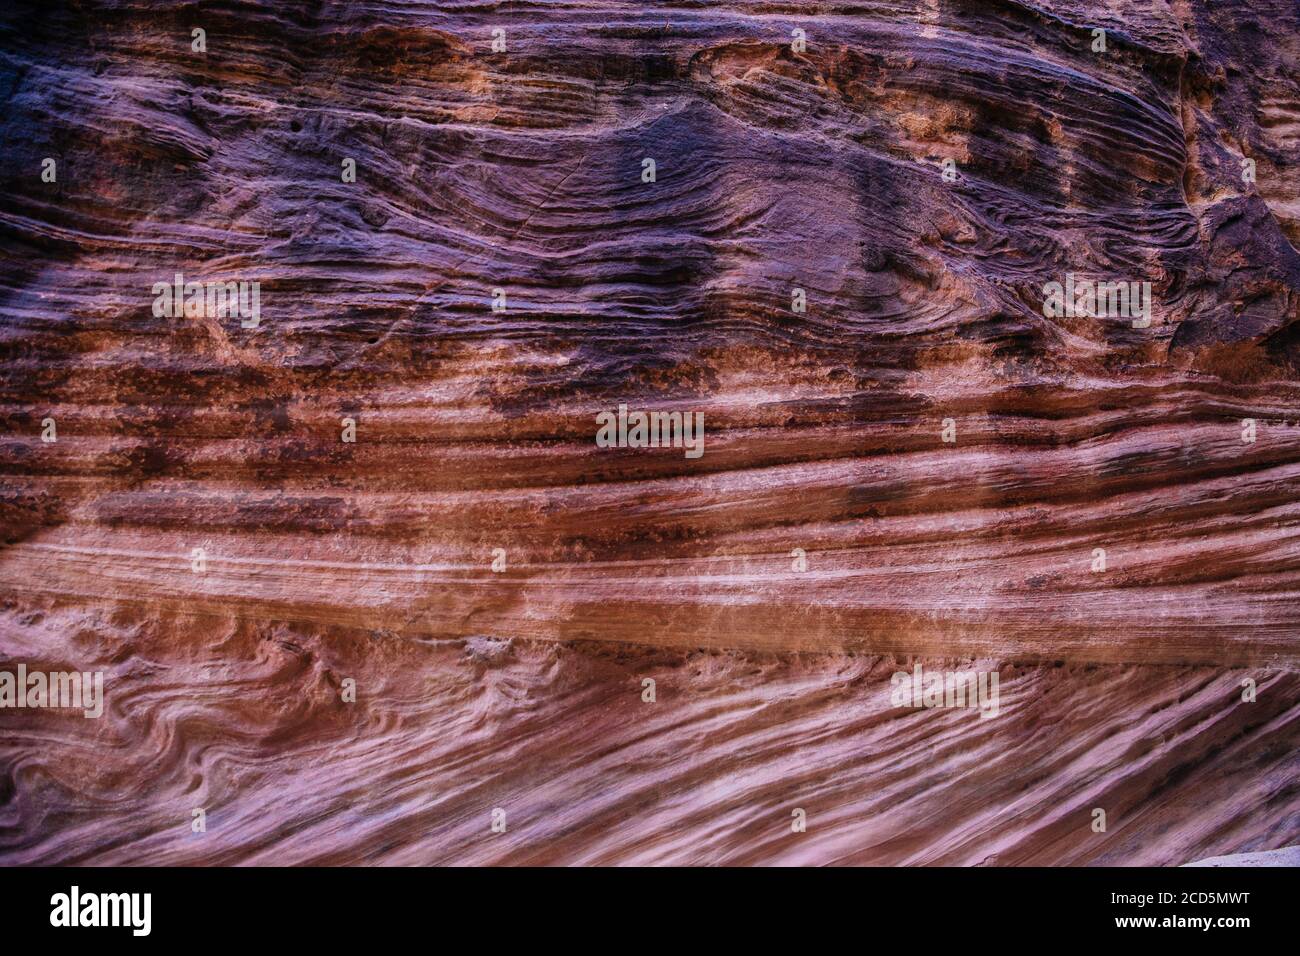 Vermillion Cliffs, Buckskin Gulch, Paria Canyon, Utah, EE.UU Foto de stock